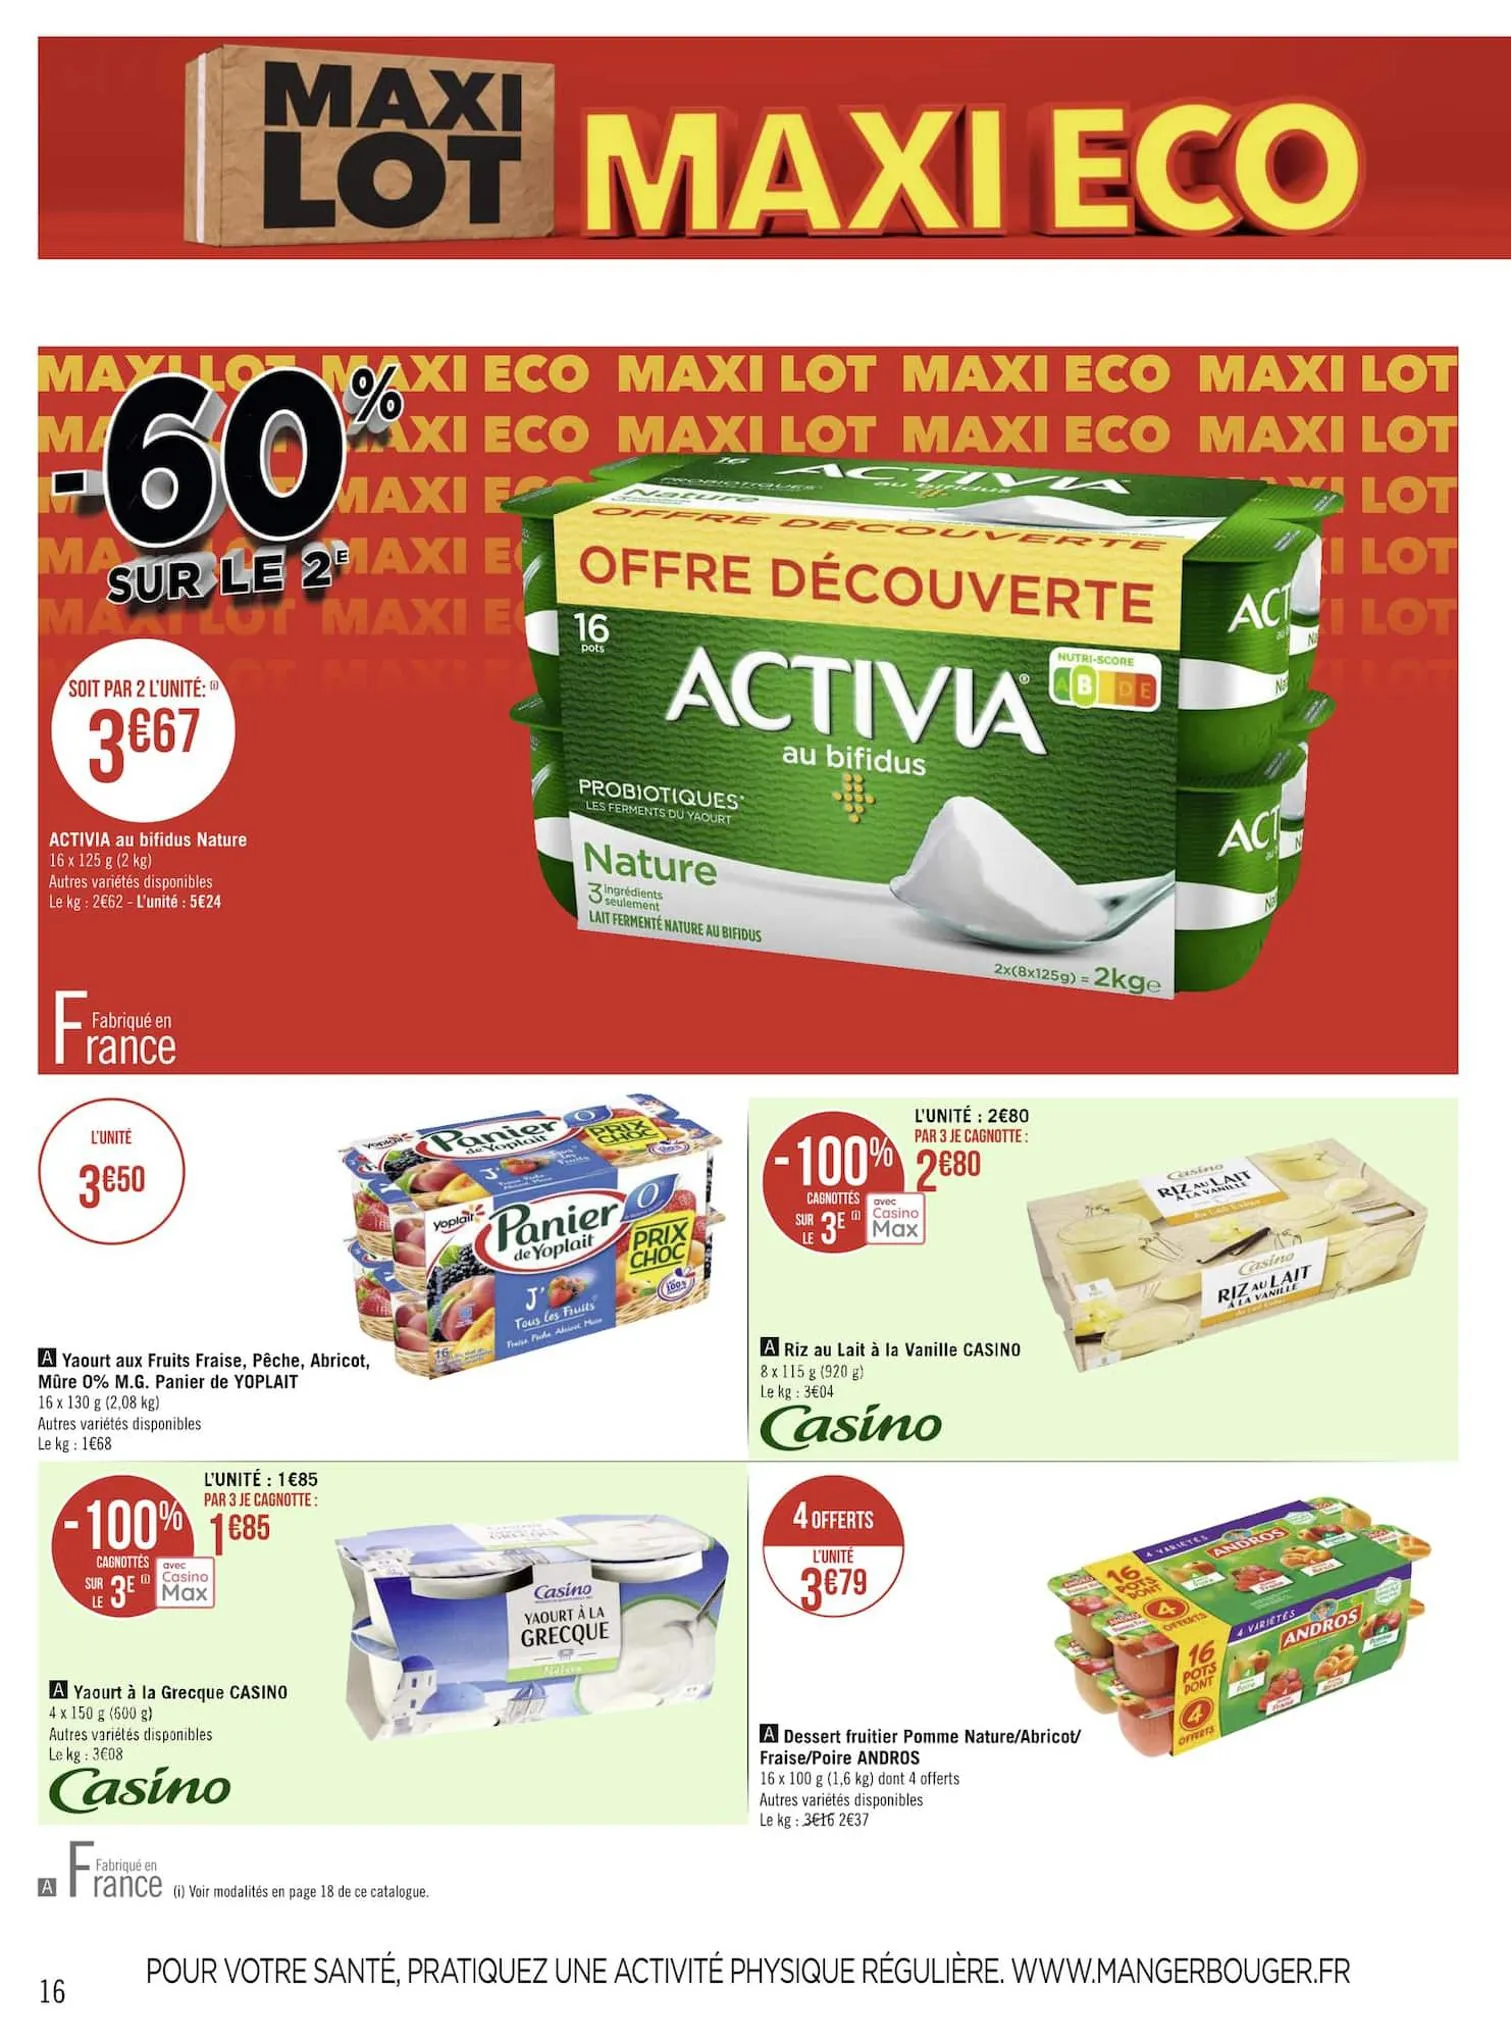 Catalogue Maxi lot, maxi eco, page 00016